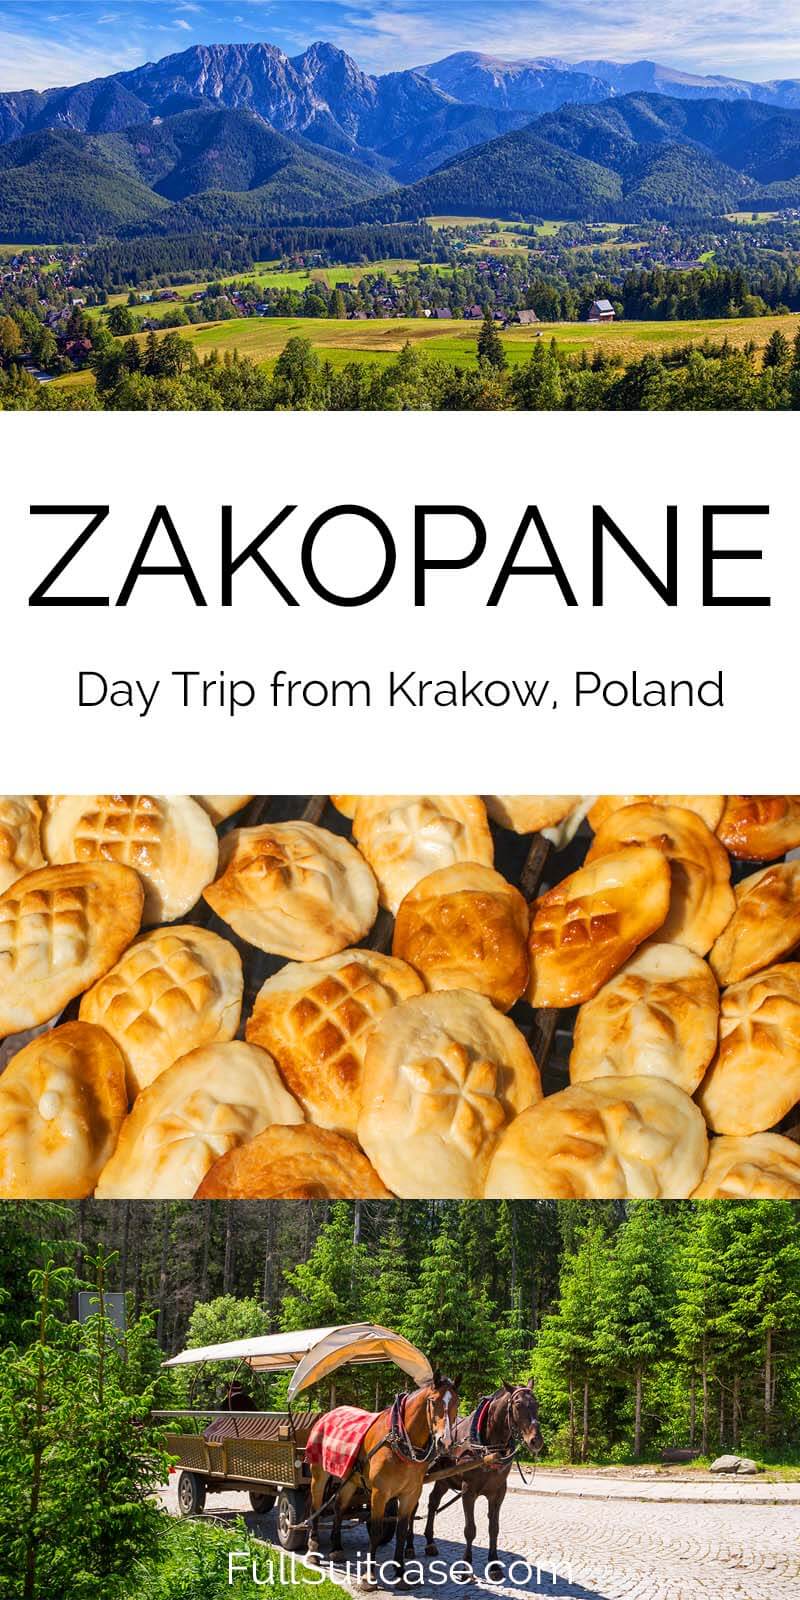 Zakopane day trip from Krakow - tour review